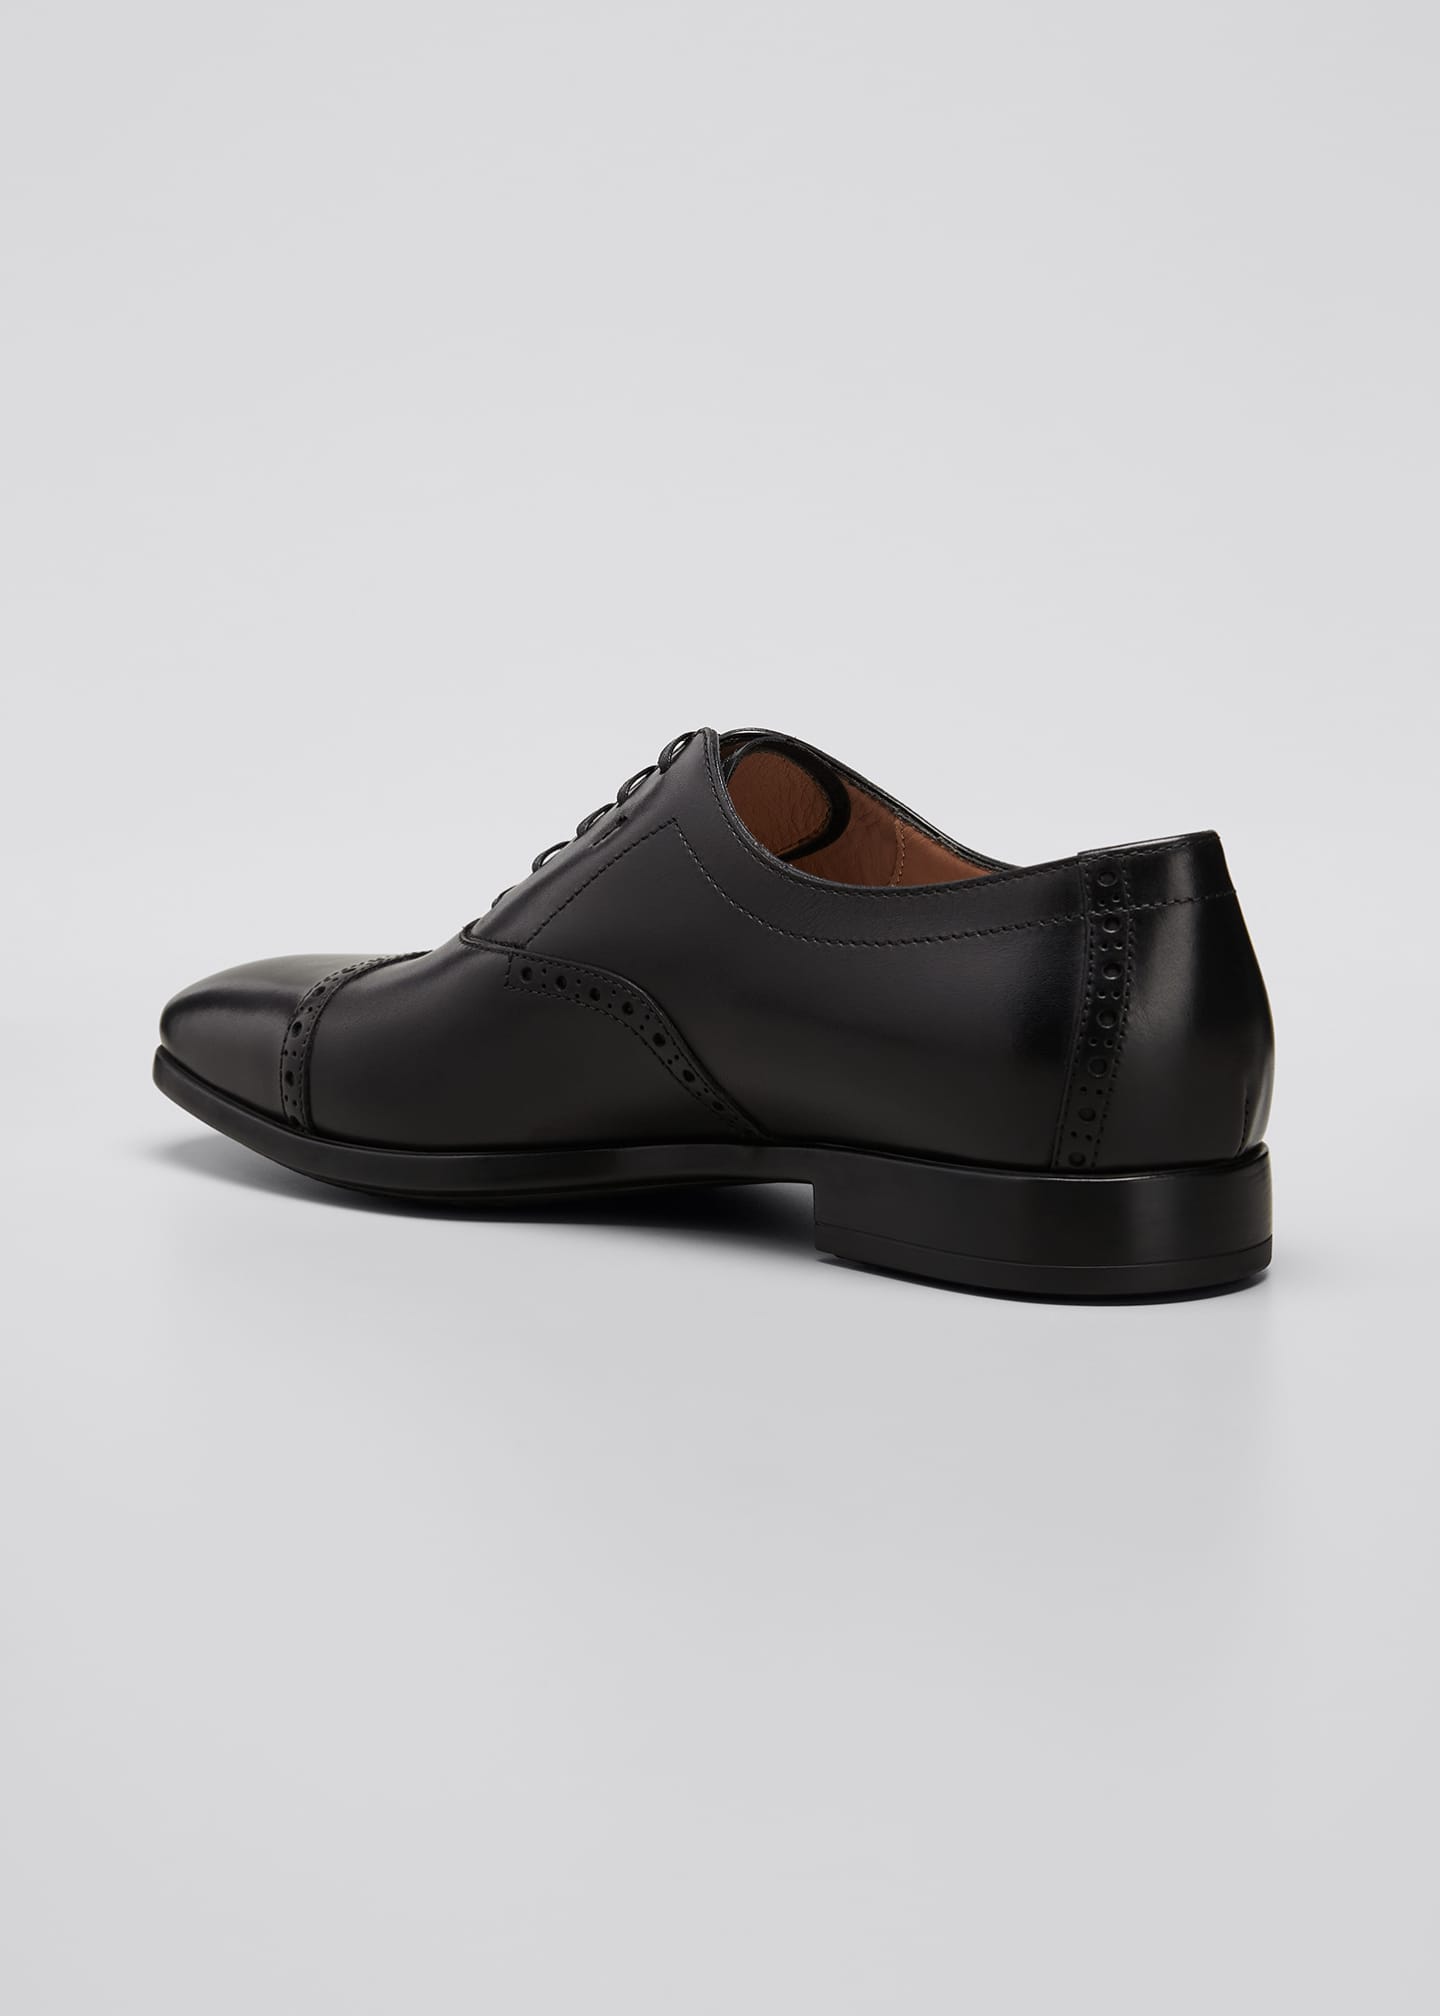 Salvatore Ferragamo Men's Saddle Leather Oxford Shoes - Bergdorf Goodman